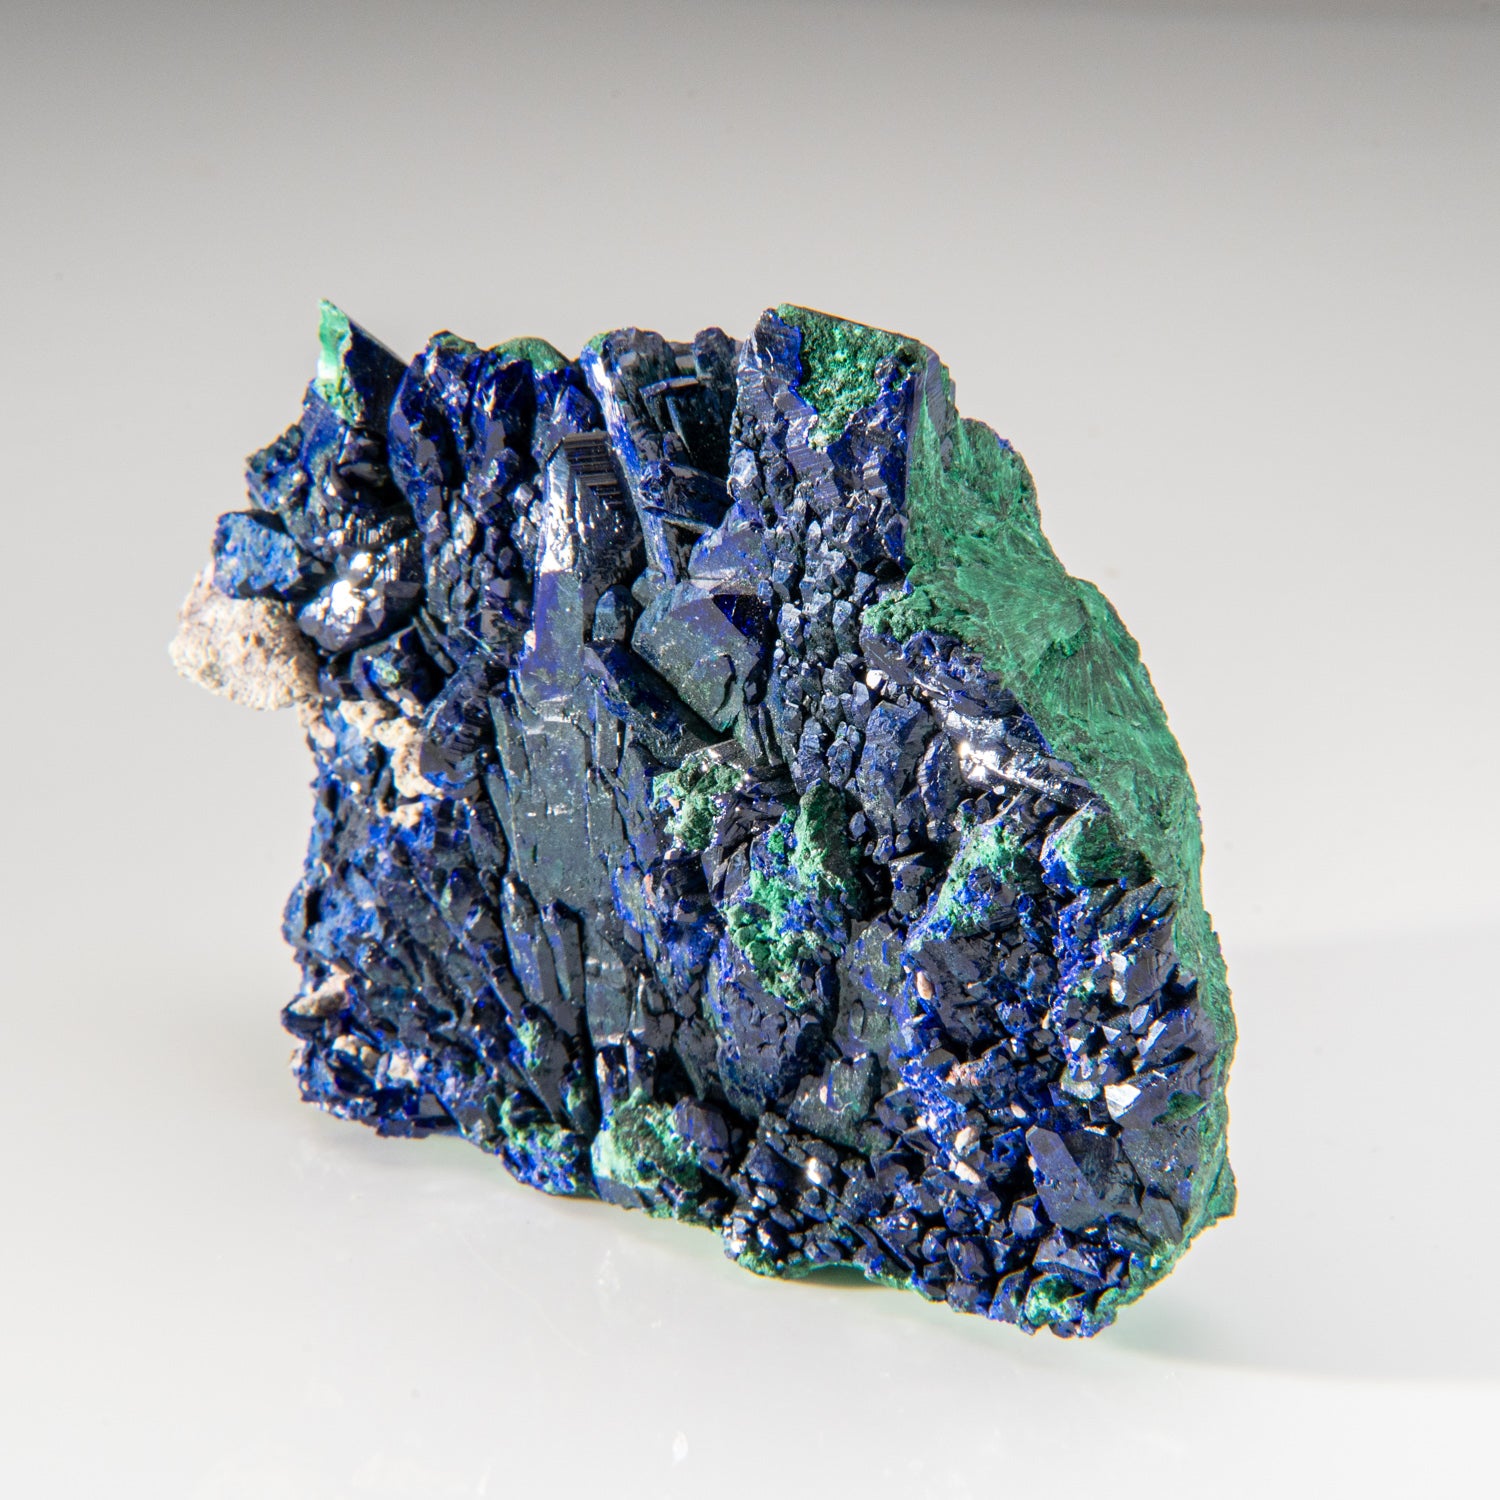 Azurite and Malachite from Liufengshan Mine, Guichi, Anhui Province, China